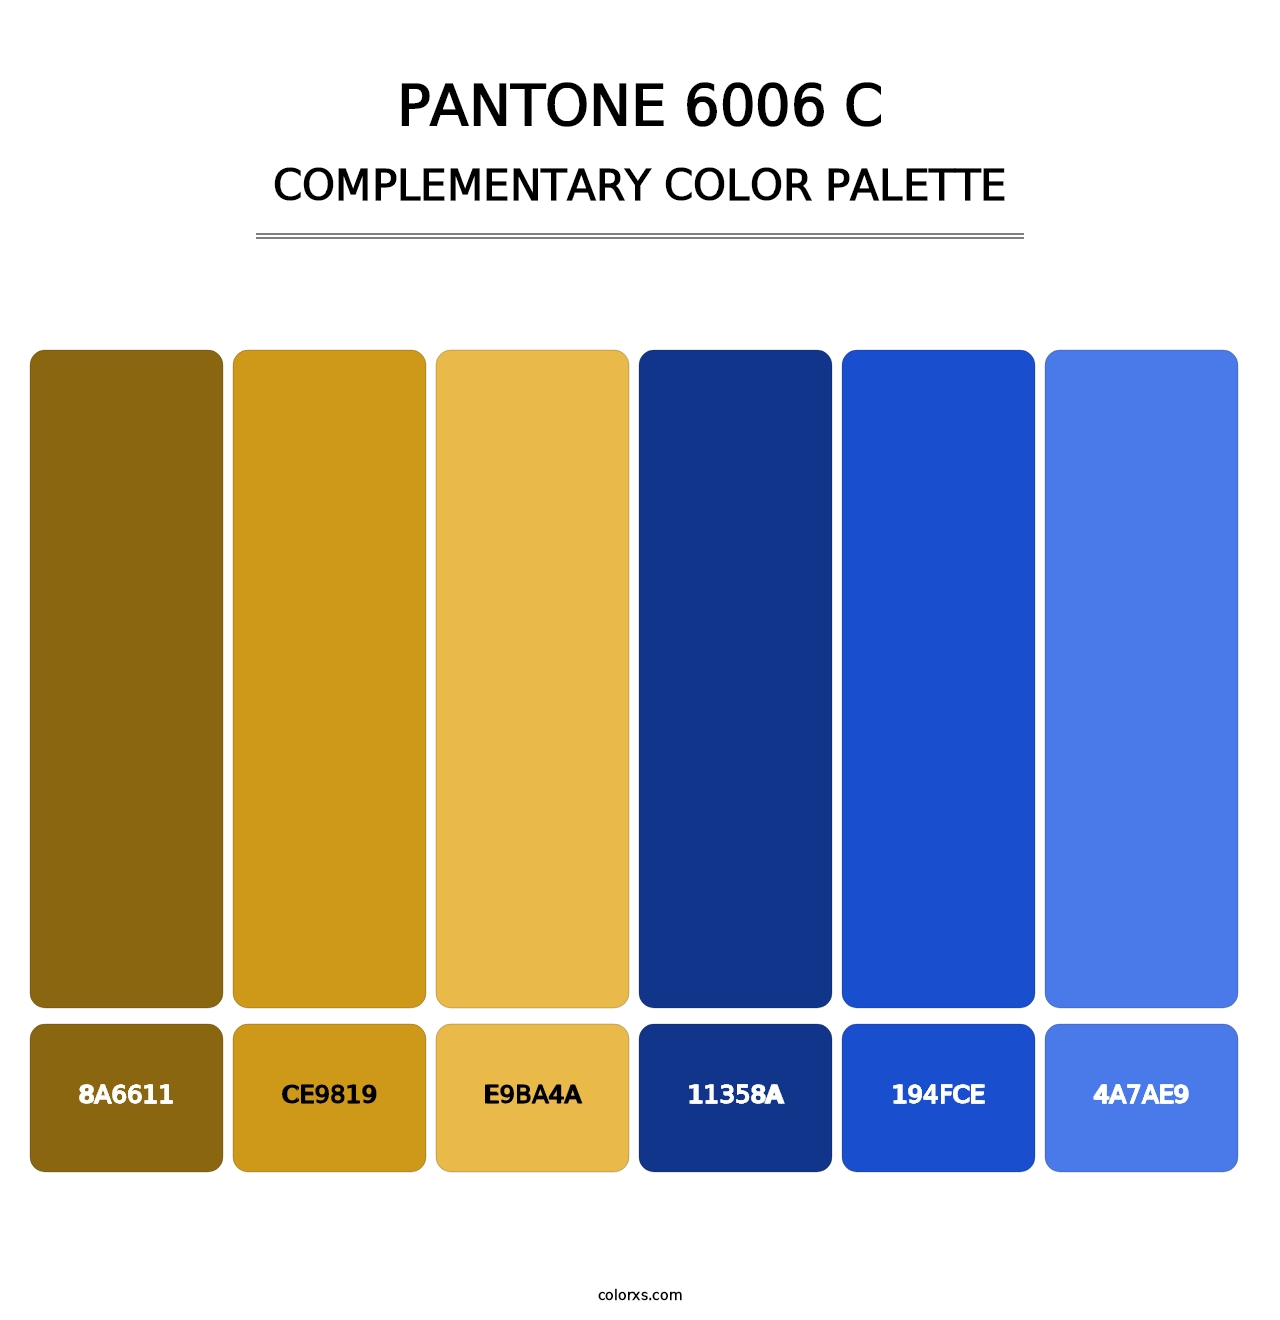 PANTONE 6006 C - Complementary Color Palette